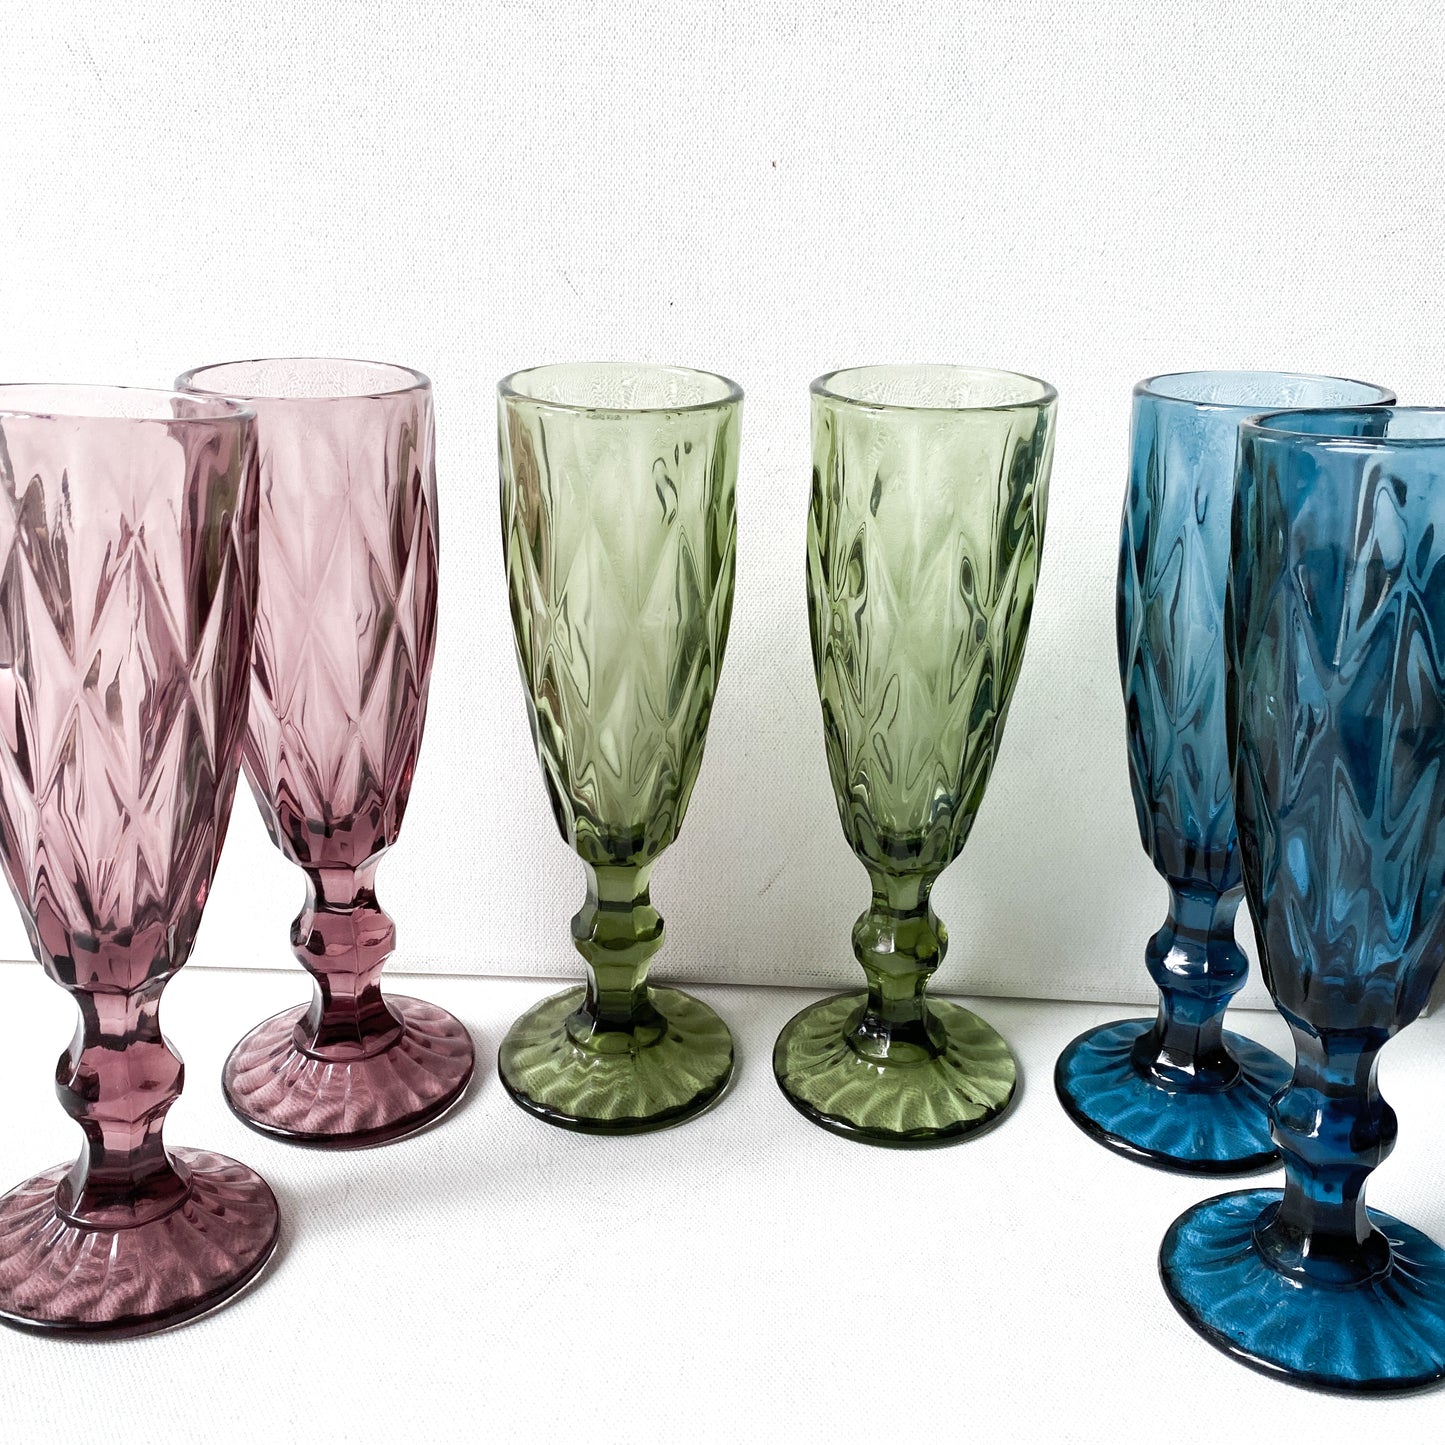 Vintage Jewel Tone Glass Set, Mix and Match Glasses,Champagne Flutes,  Goblets, Colorful Tablescape, Party Decor,